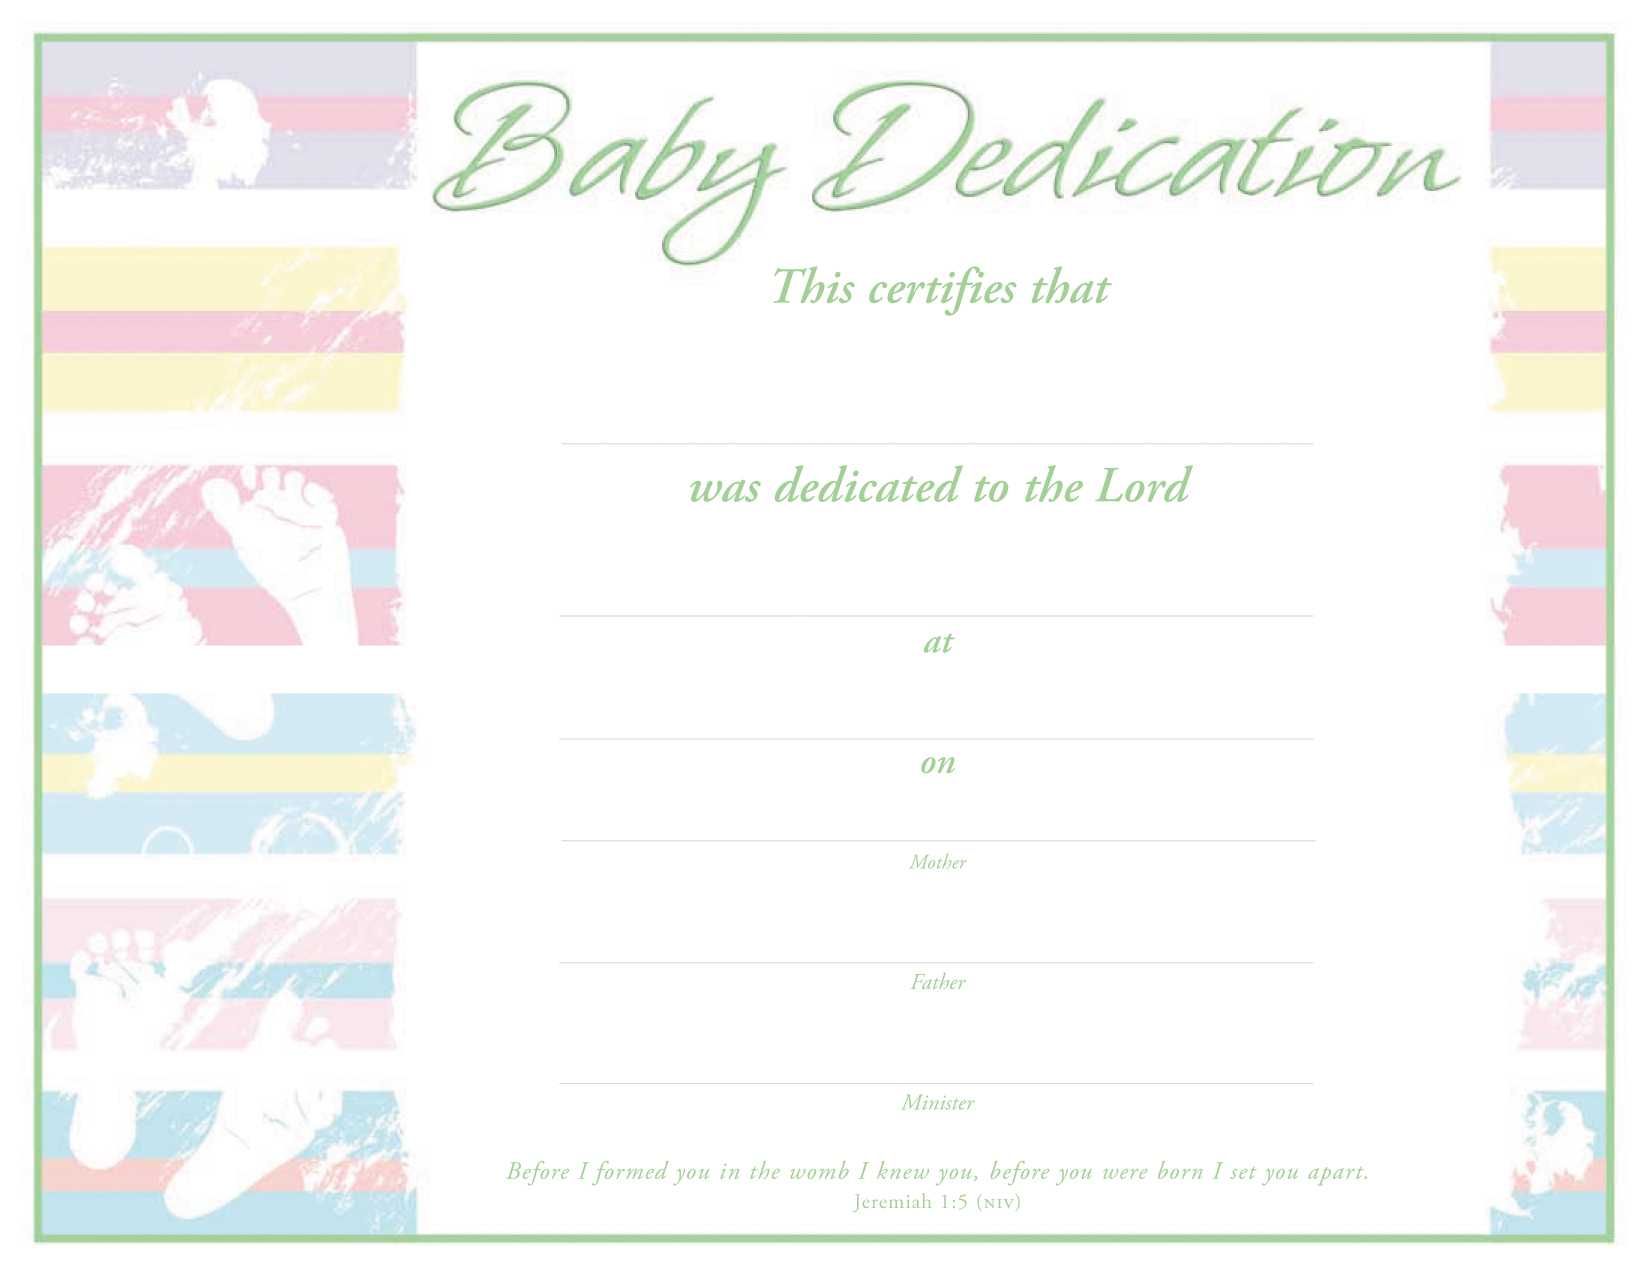 Baby Dedication Certificate – Certificate – Dedication Within Baby Dedication Certificate Template